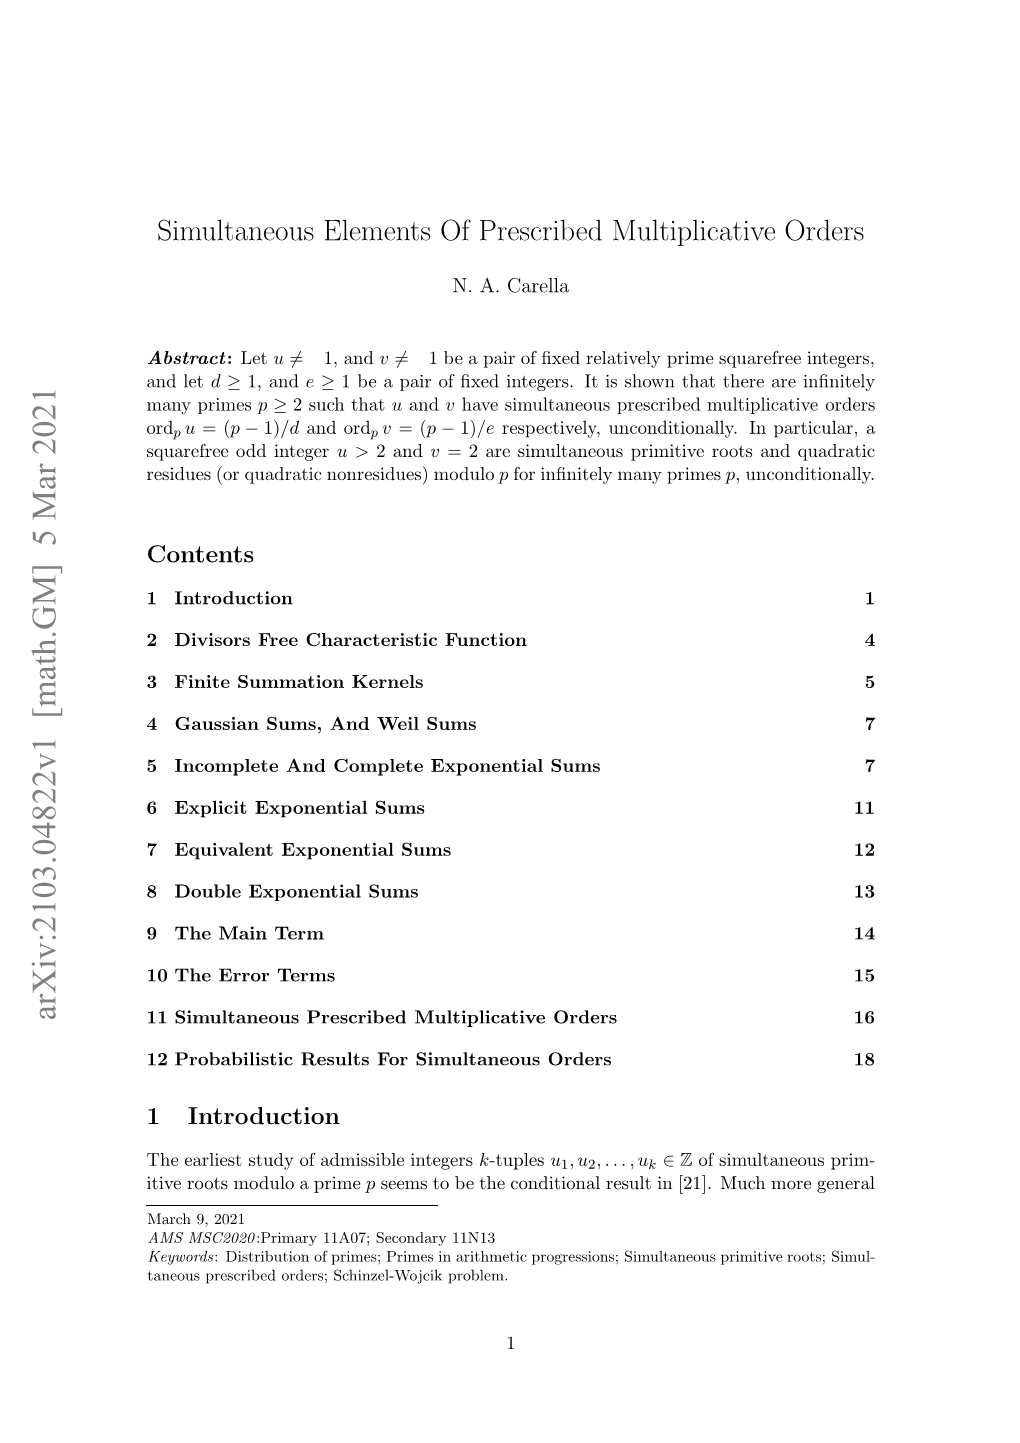 Simultaneous Elements of Prescribed Multiplicative Orders 2